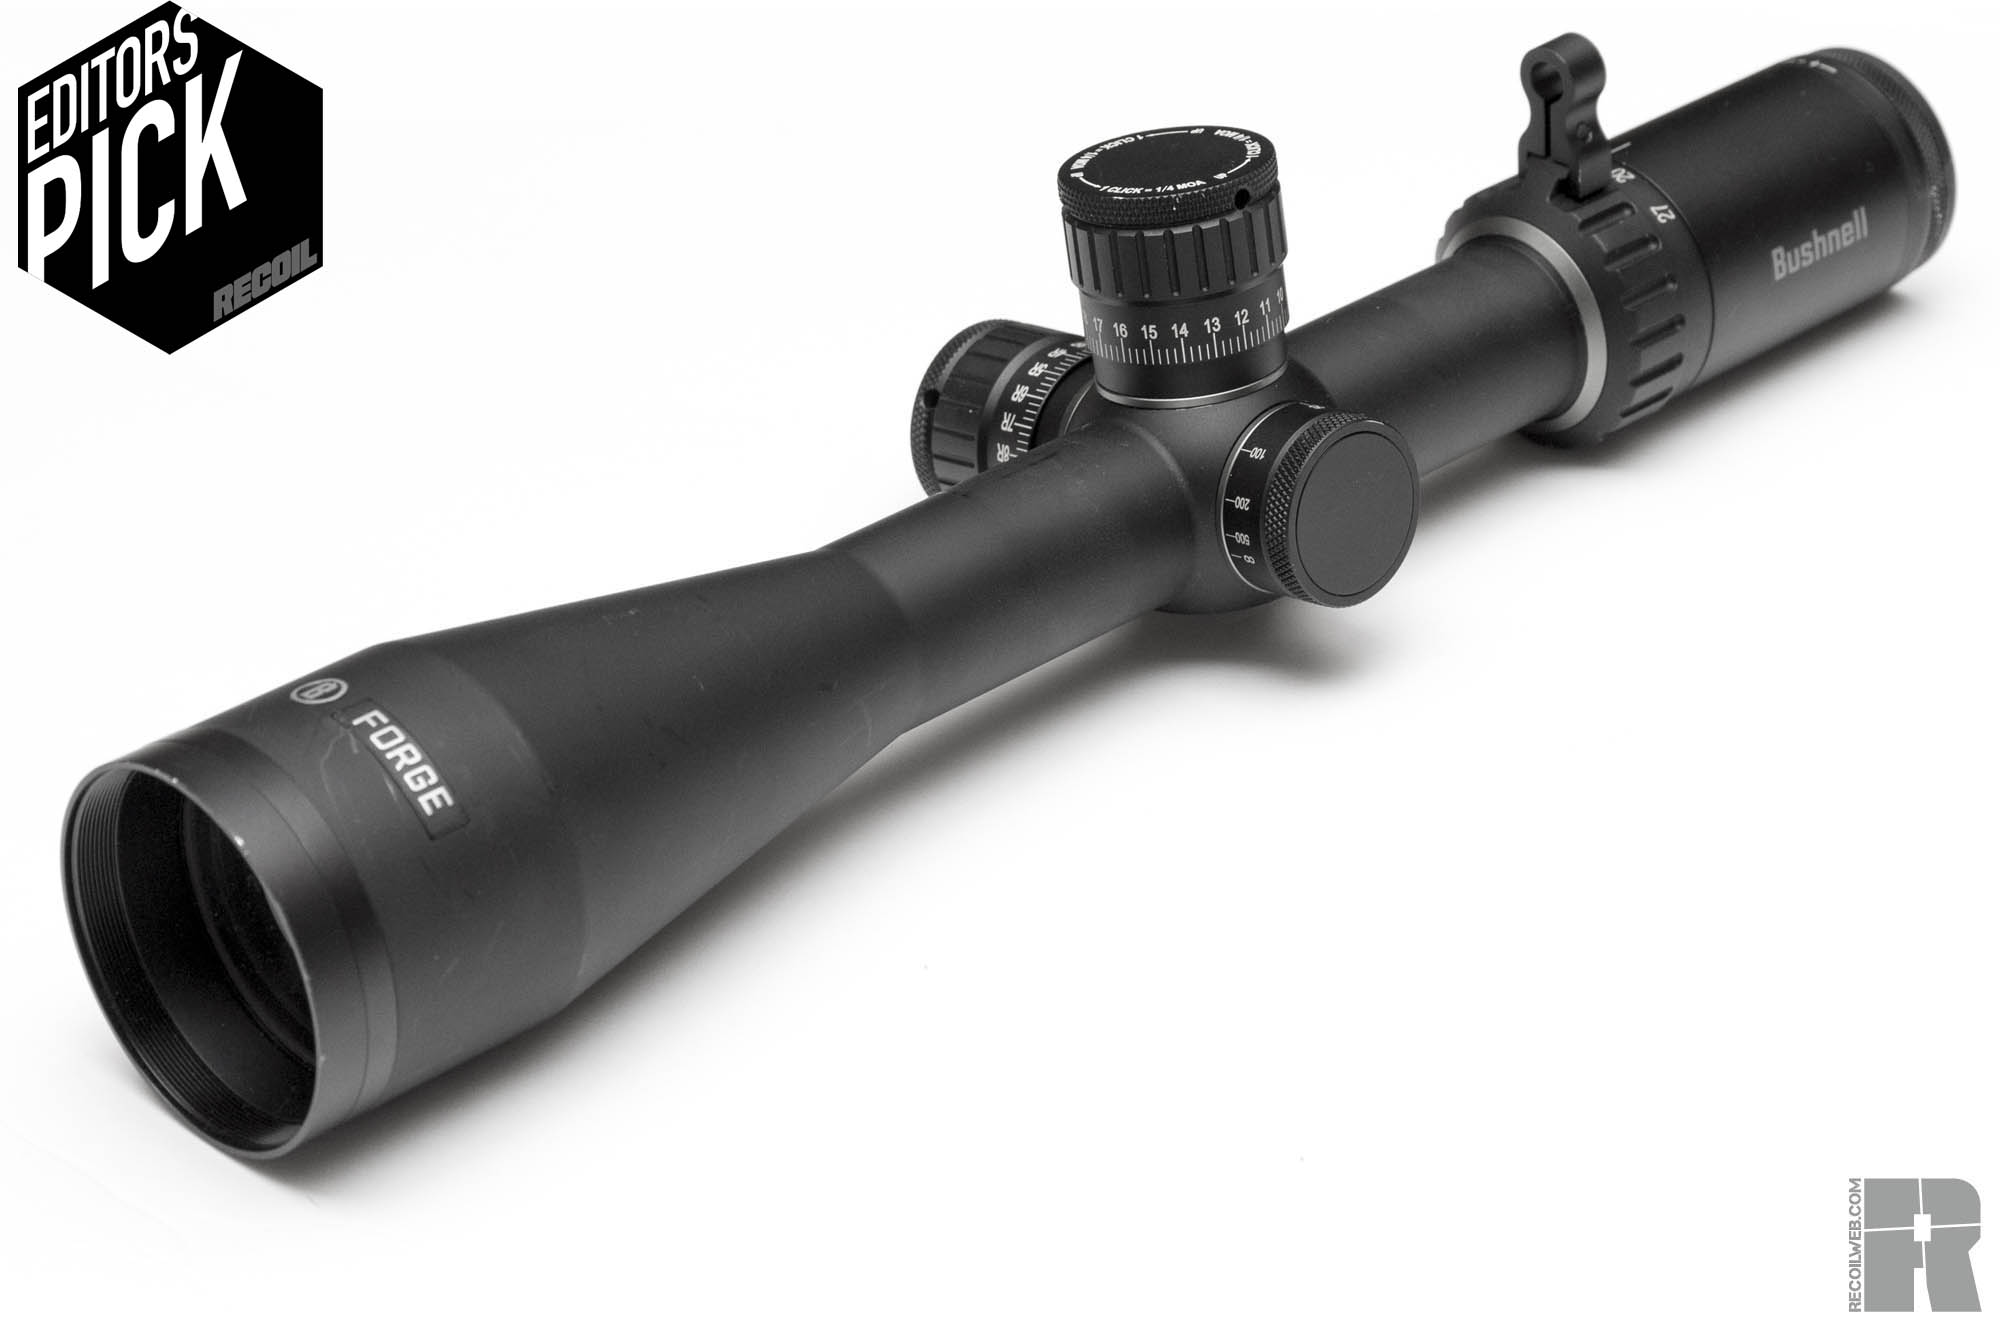 Bushnell Forge 4.5-27x rifle scopes